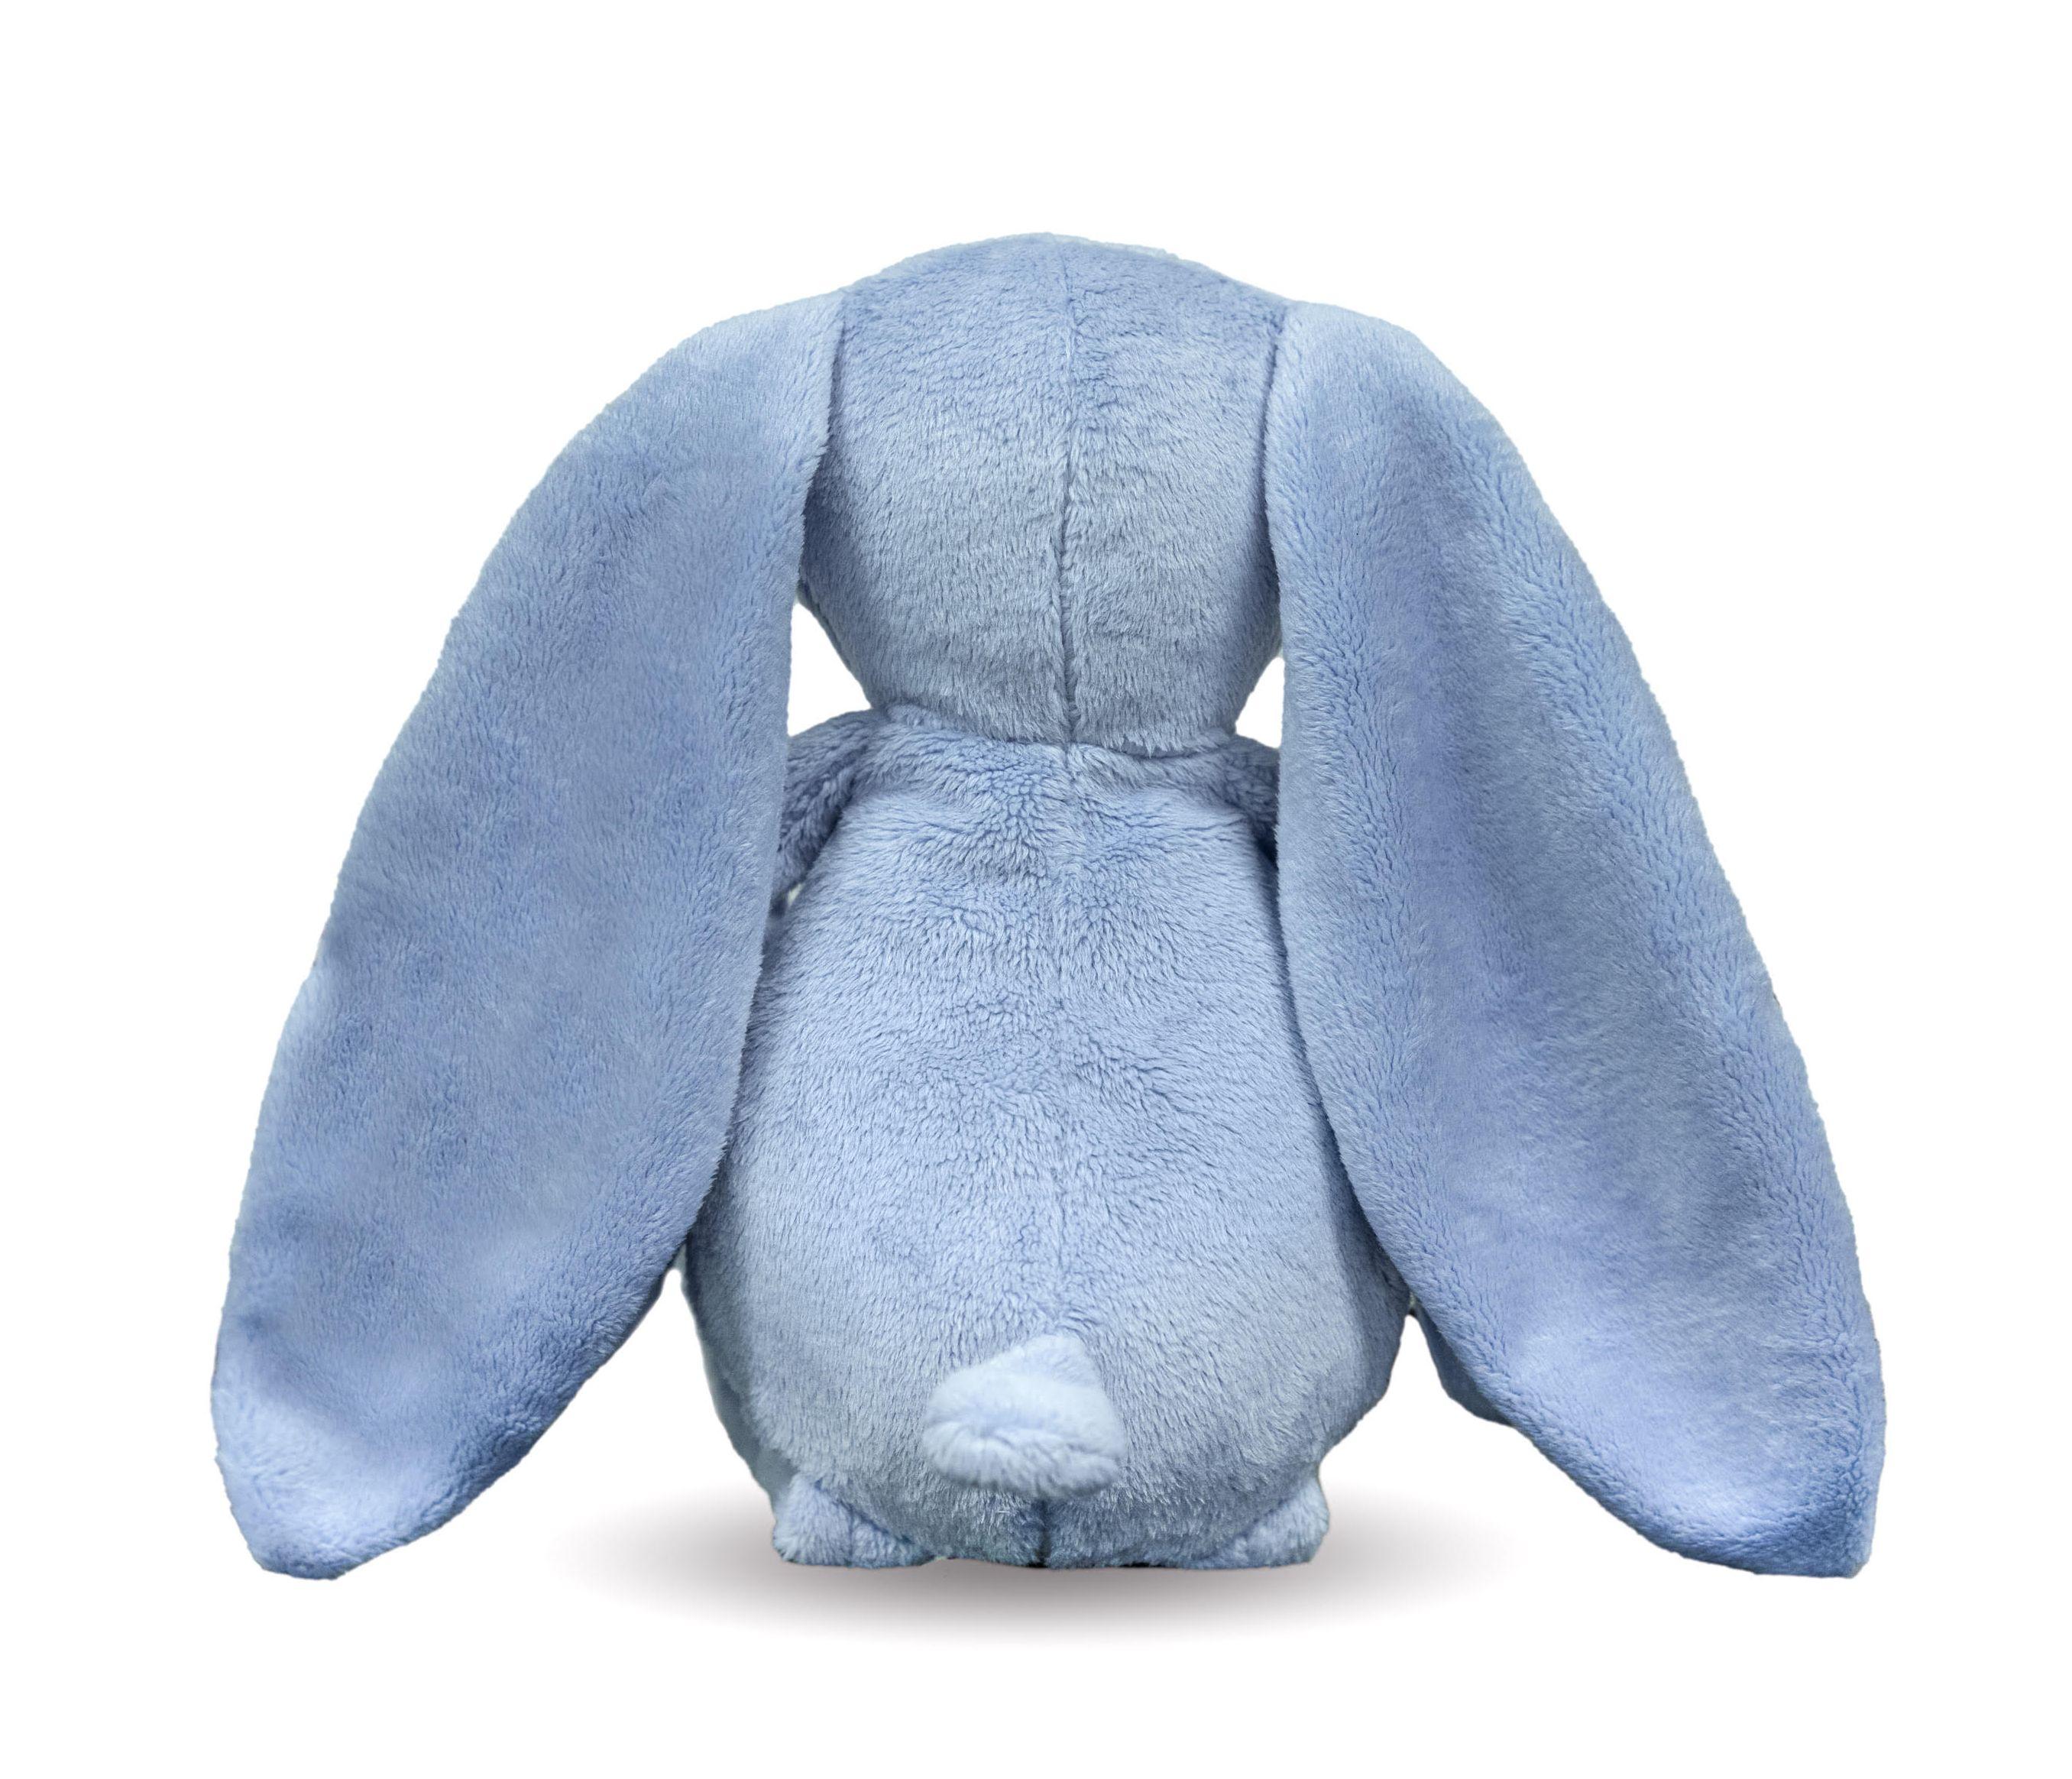 Noisy plush Diddou teddy bear (with star projector) - blue